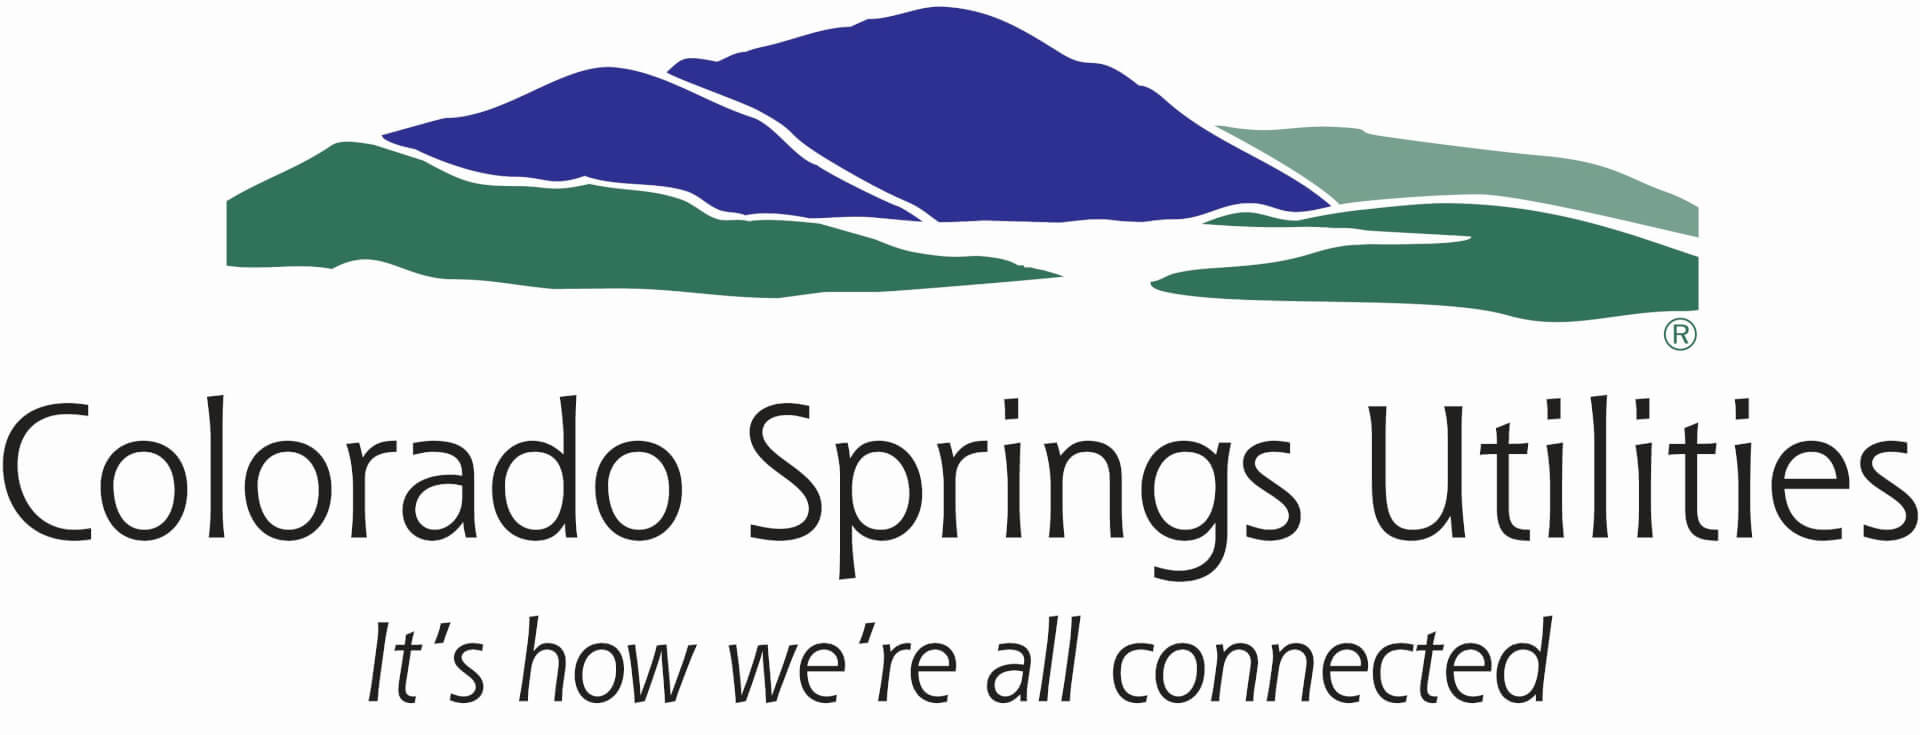 Colorado-Springs-Utilities-Logo | Downtown Partnership of Colorado ...